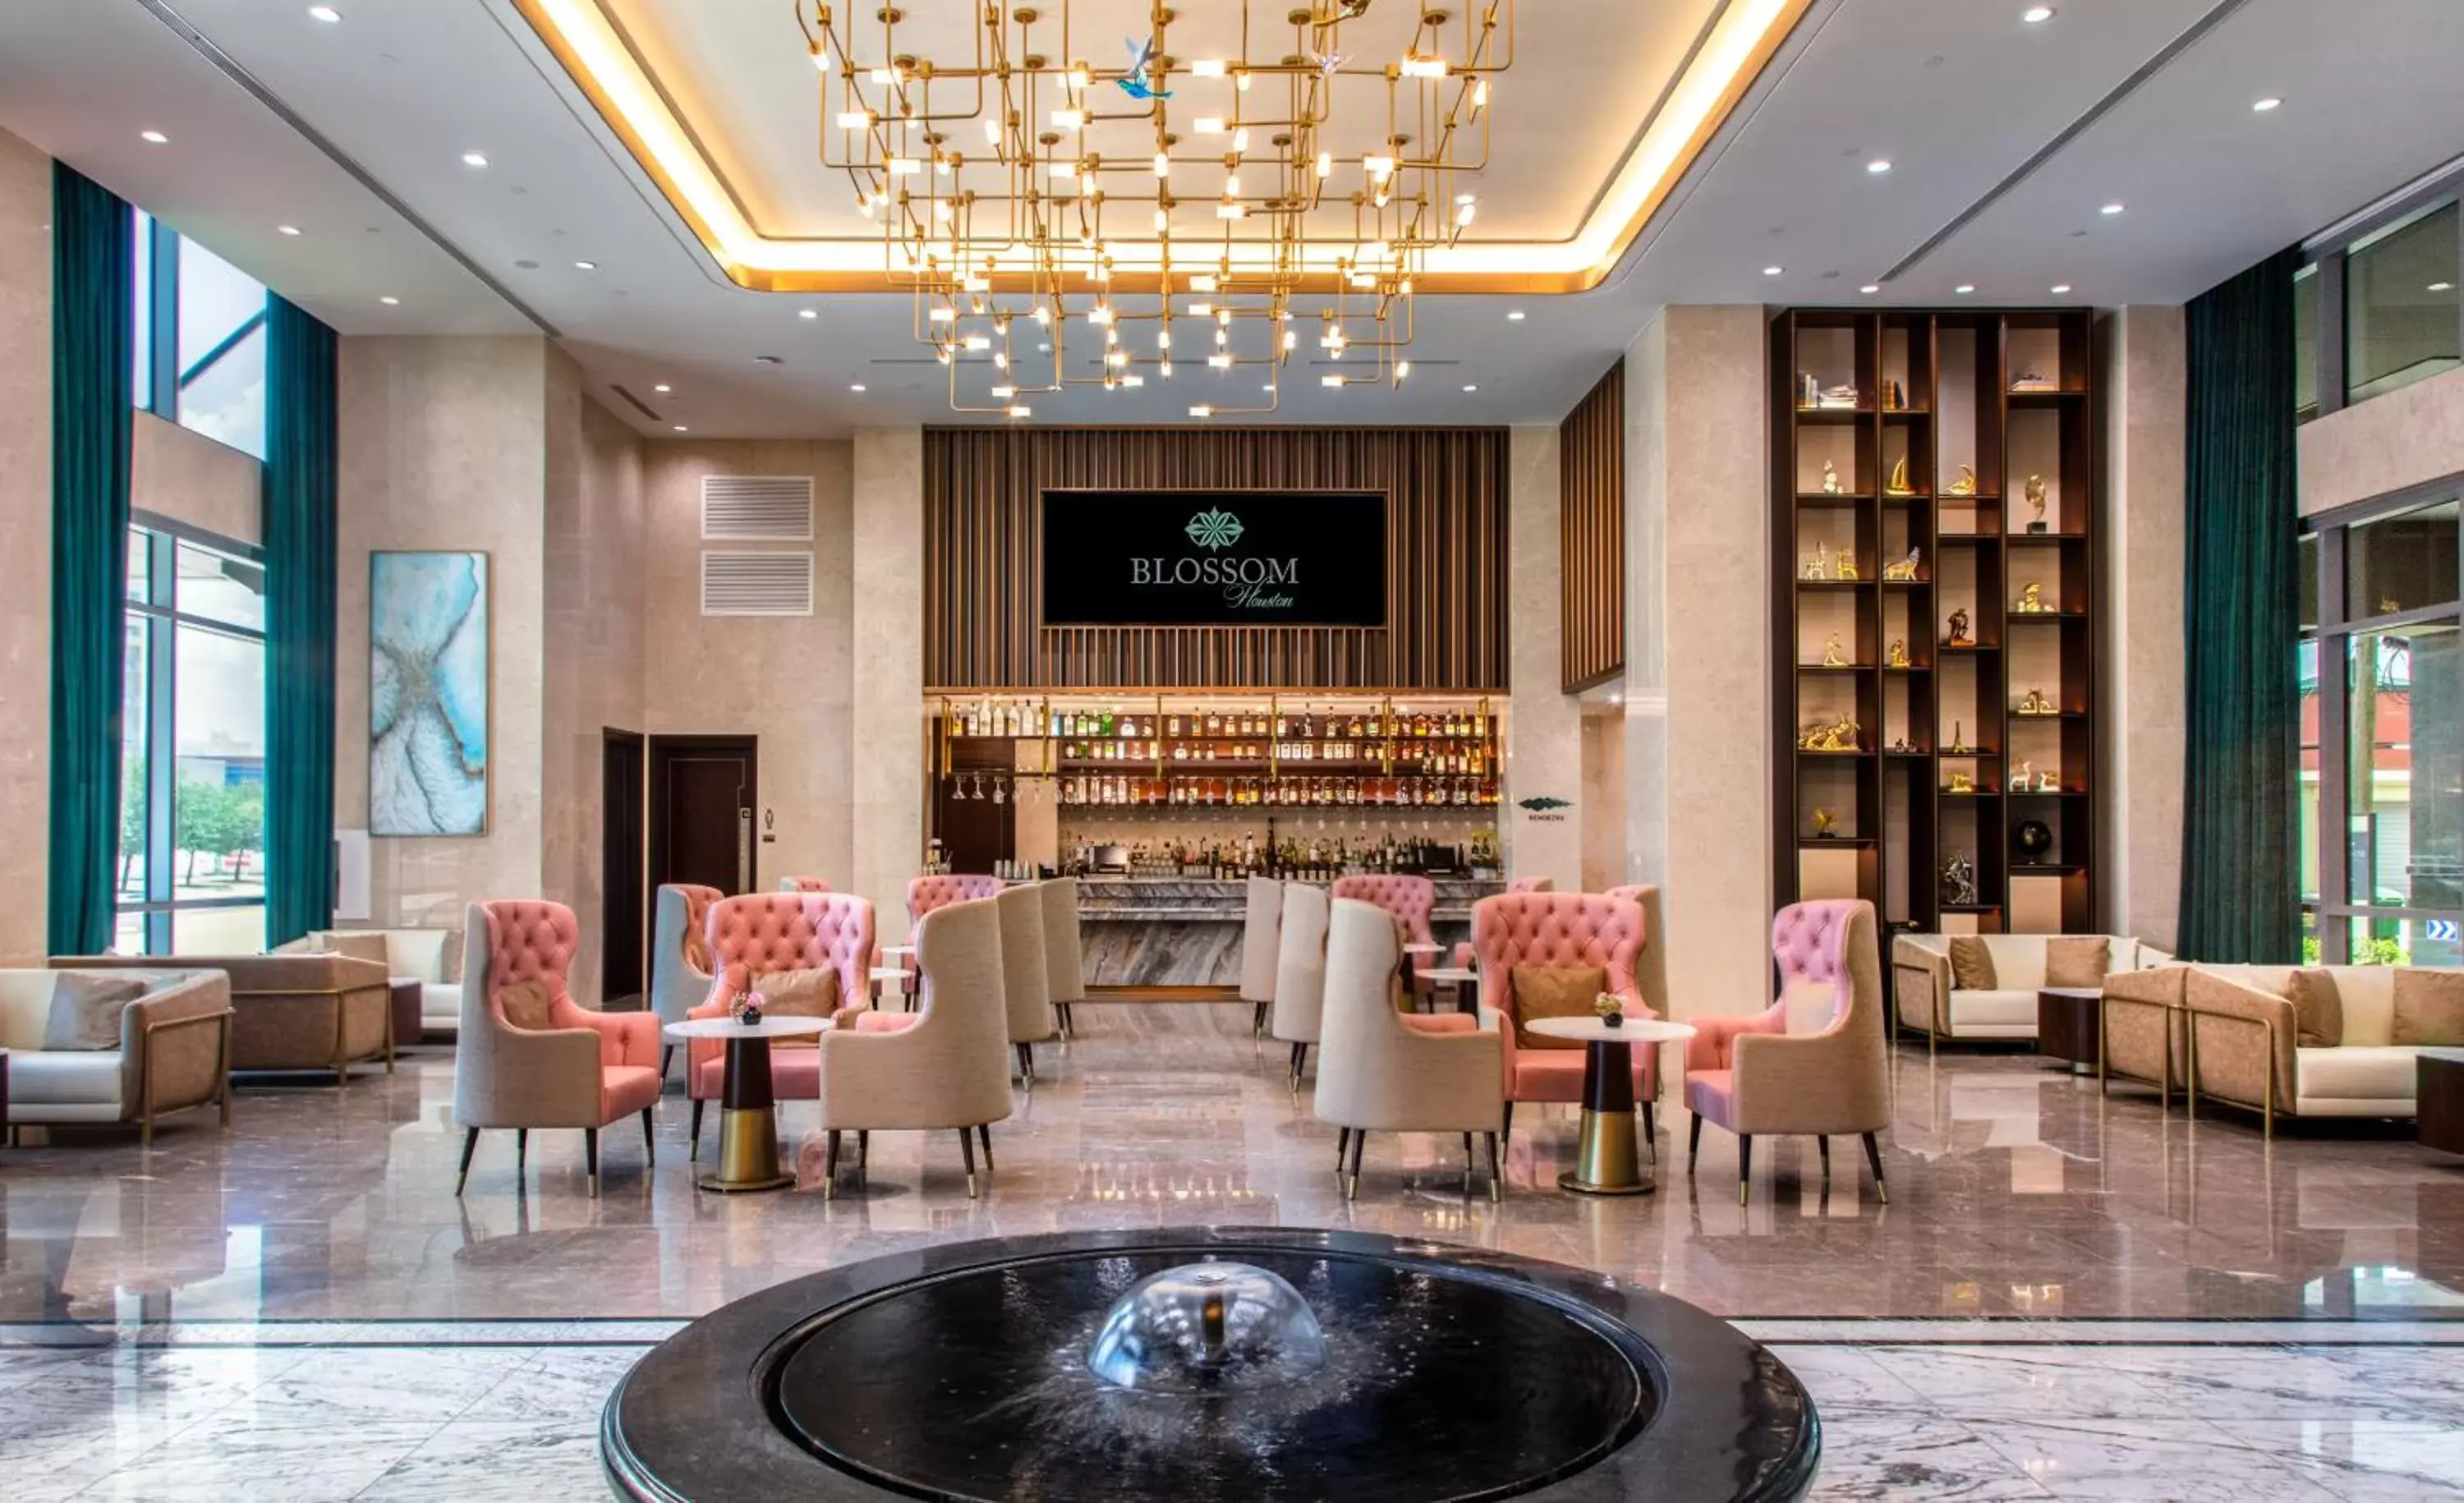 Lobby or reception in Blossom Hotel Houston